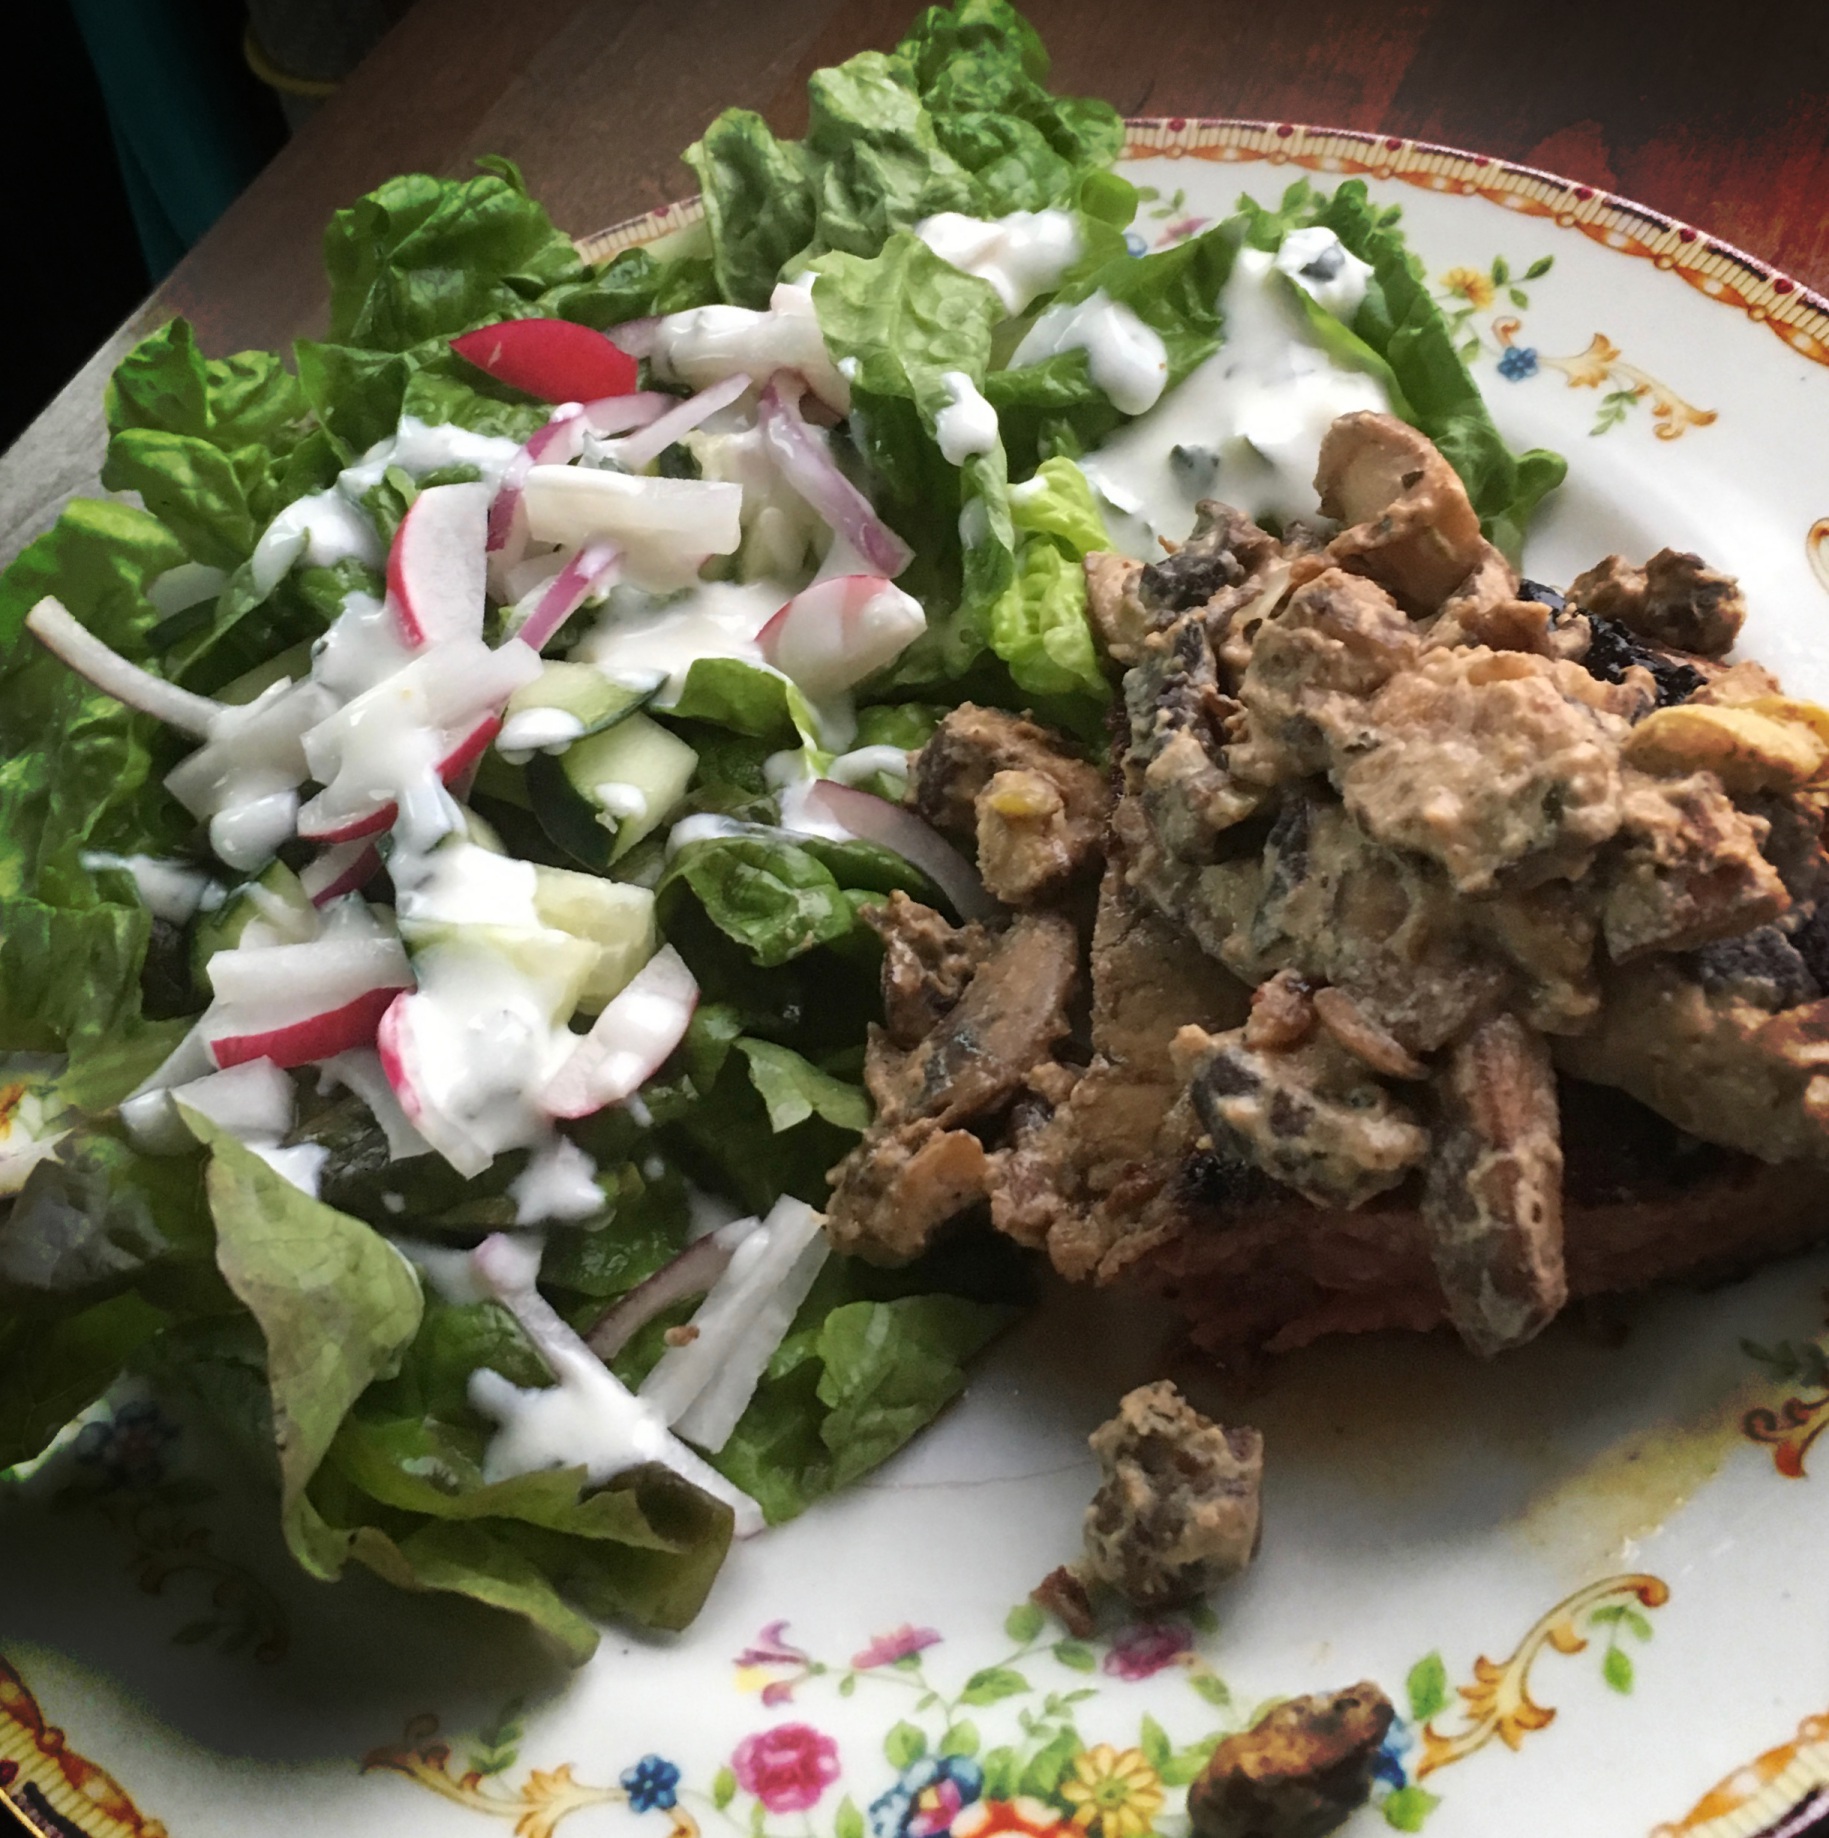 Salad with yogurt-based dressing, and steak topped with a yogurt-based mushroom sauce